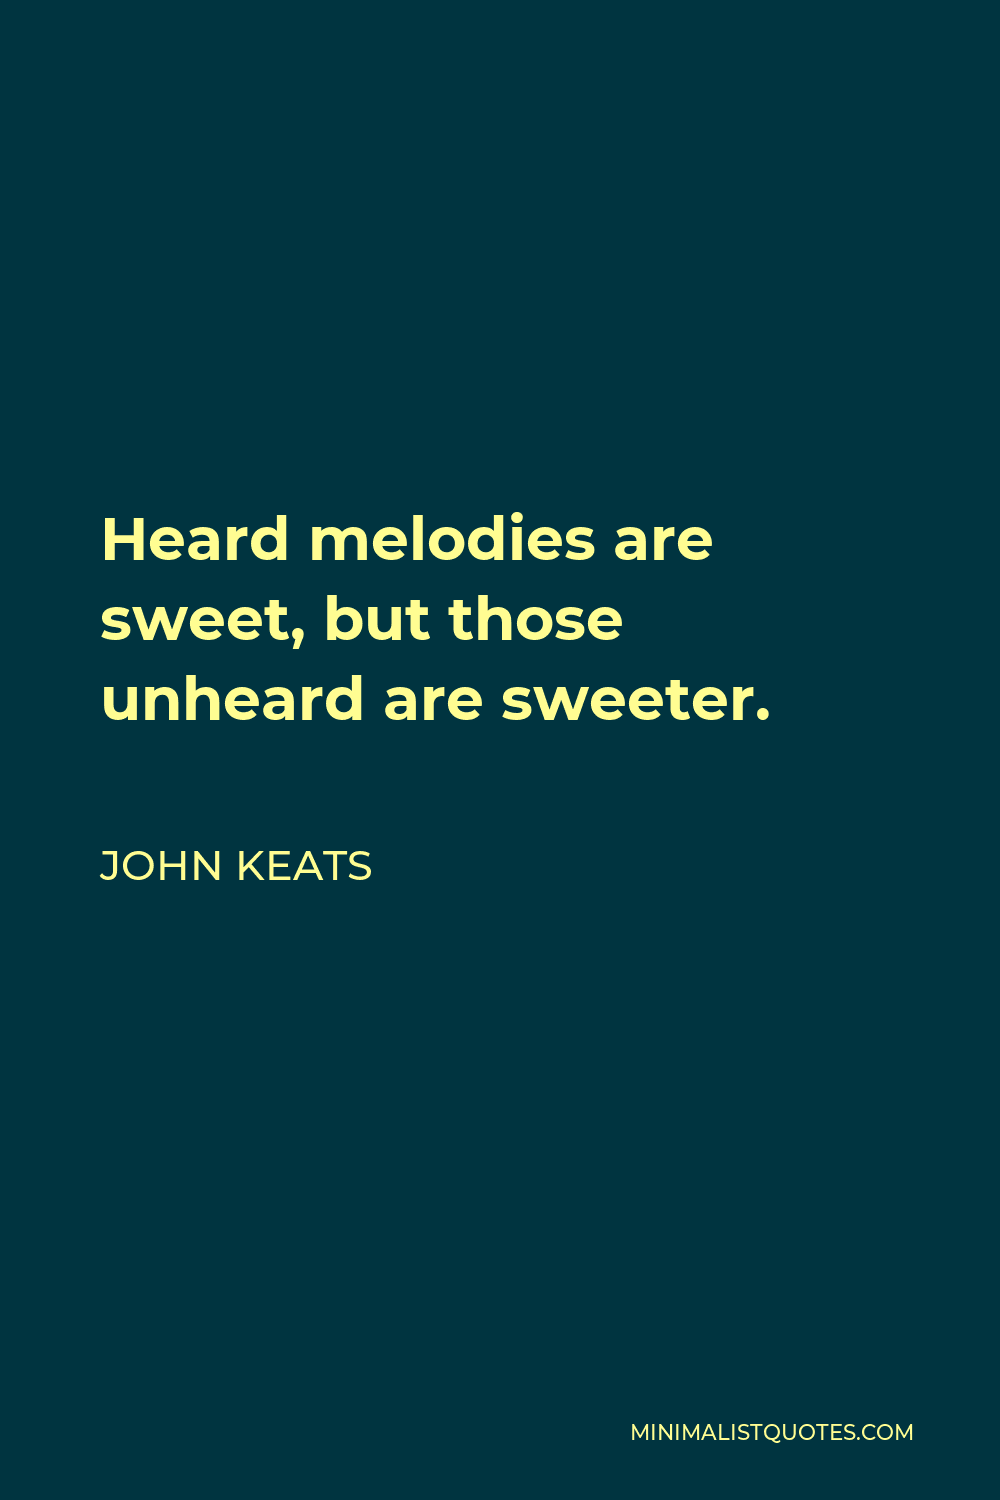 john keats quotes